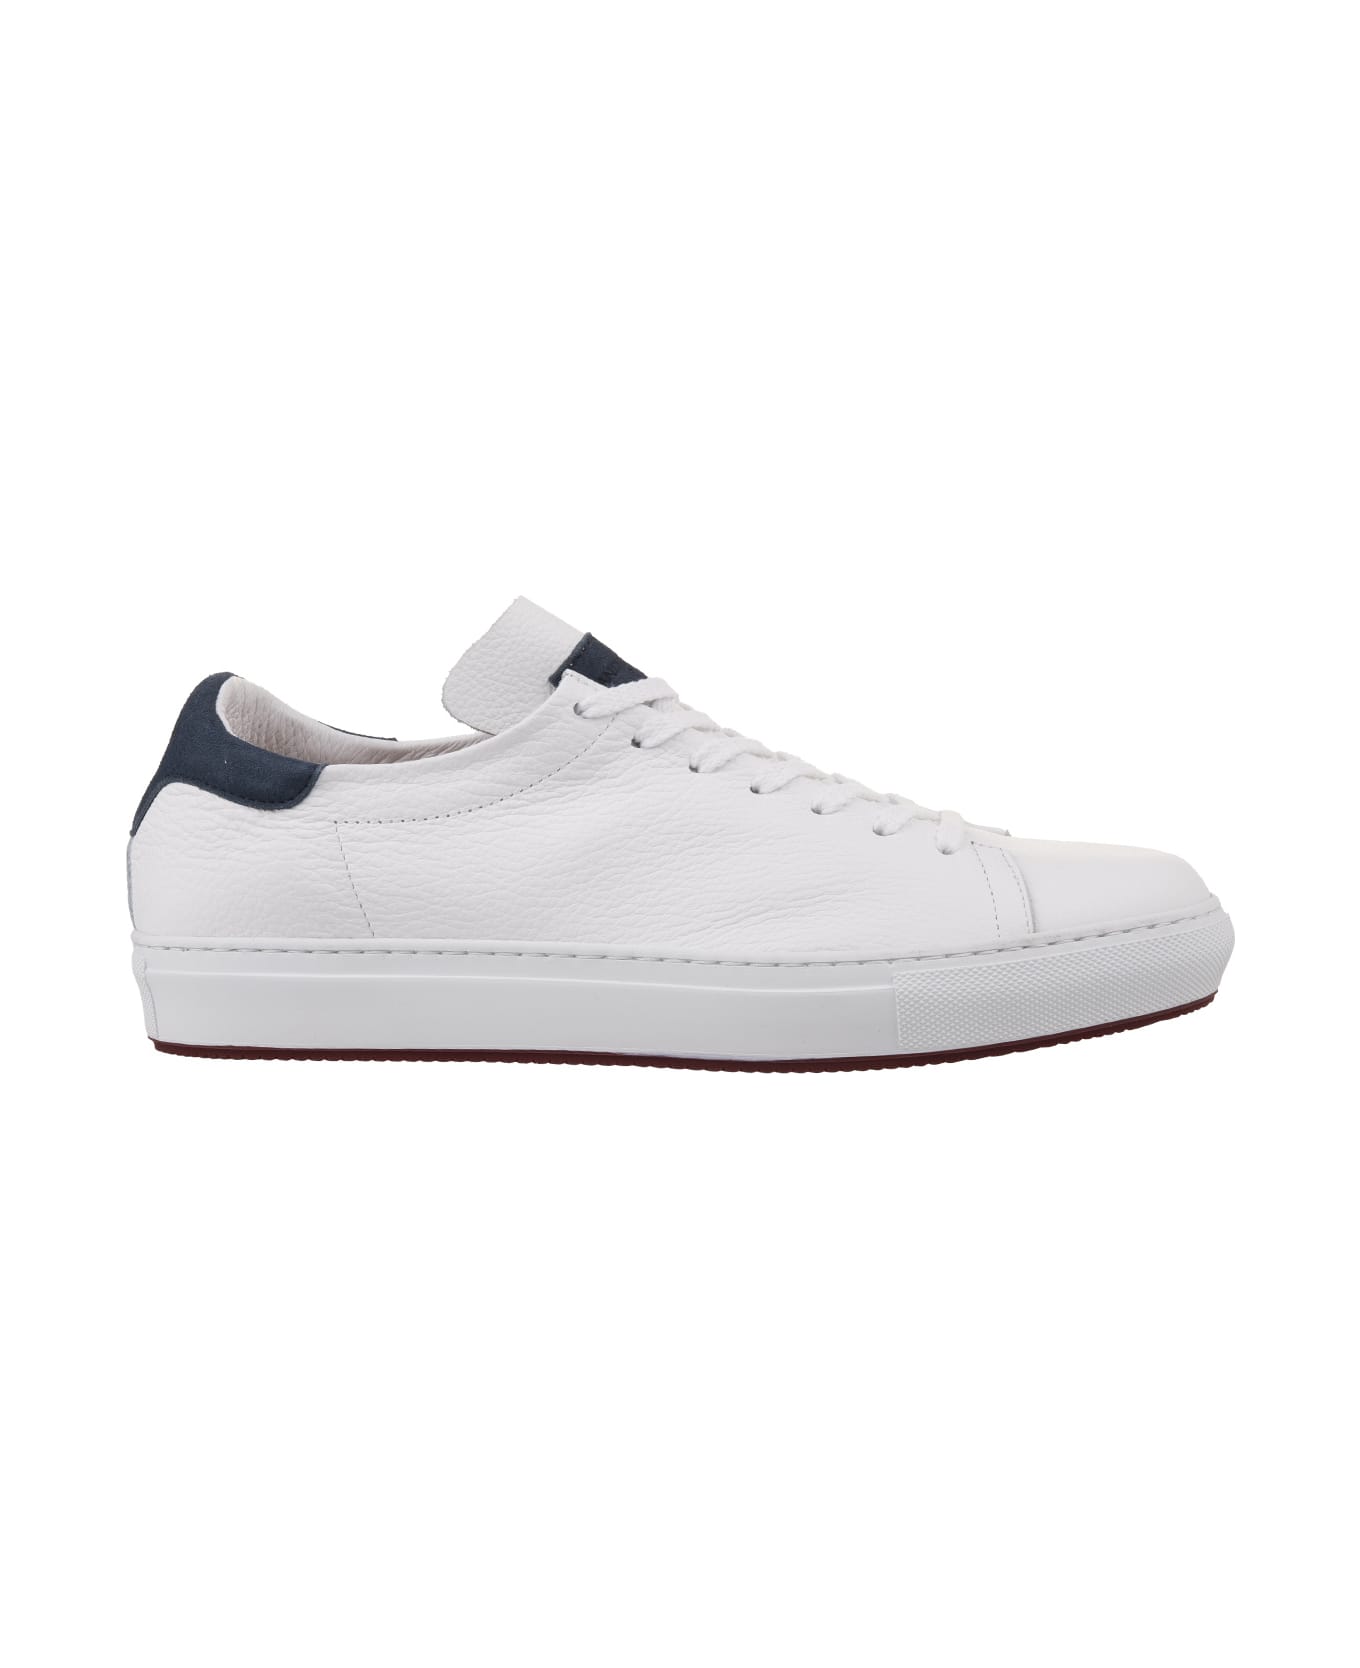 Andrea Ventura White Leather Sneakers With Blue Spoiler - White